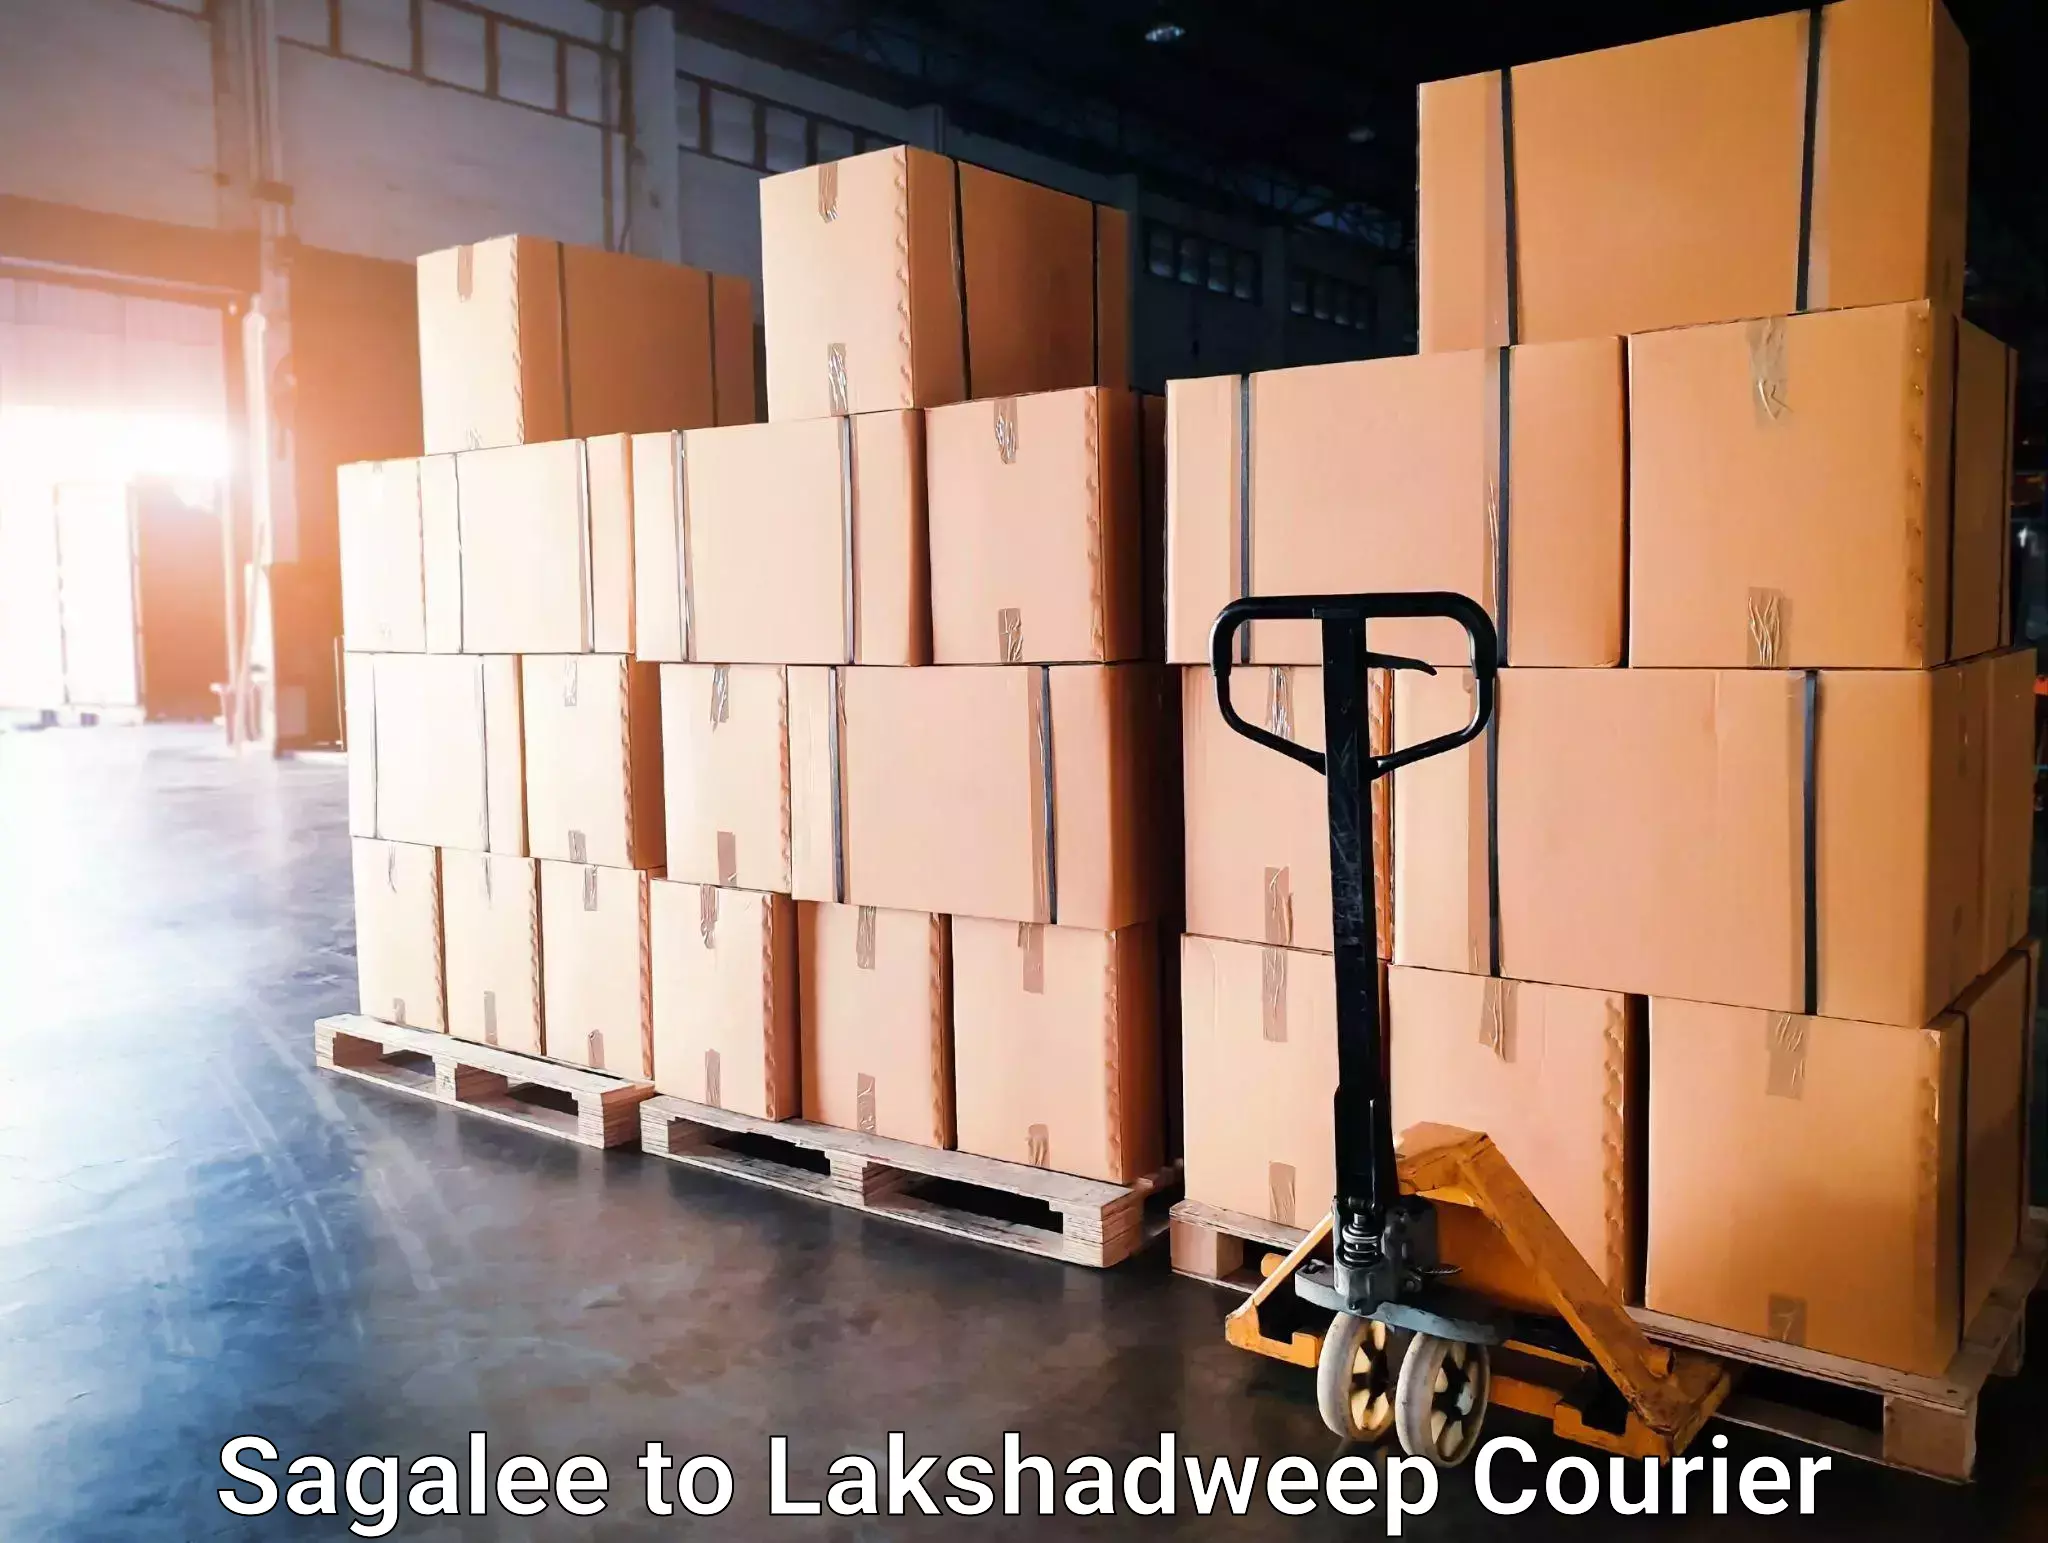 Courier service partnerships Sagalee to Lakshadweep